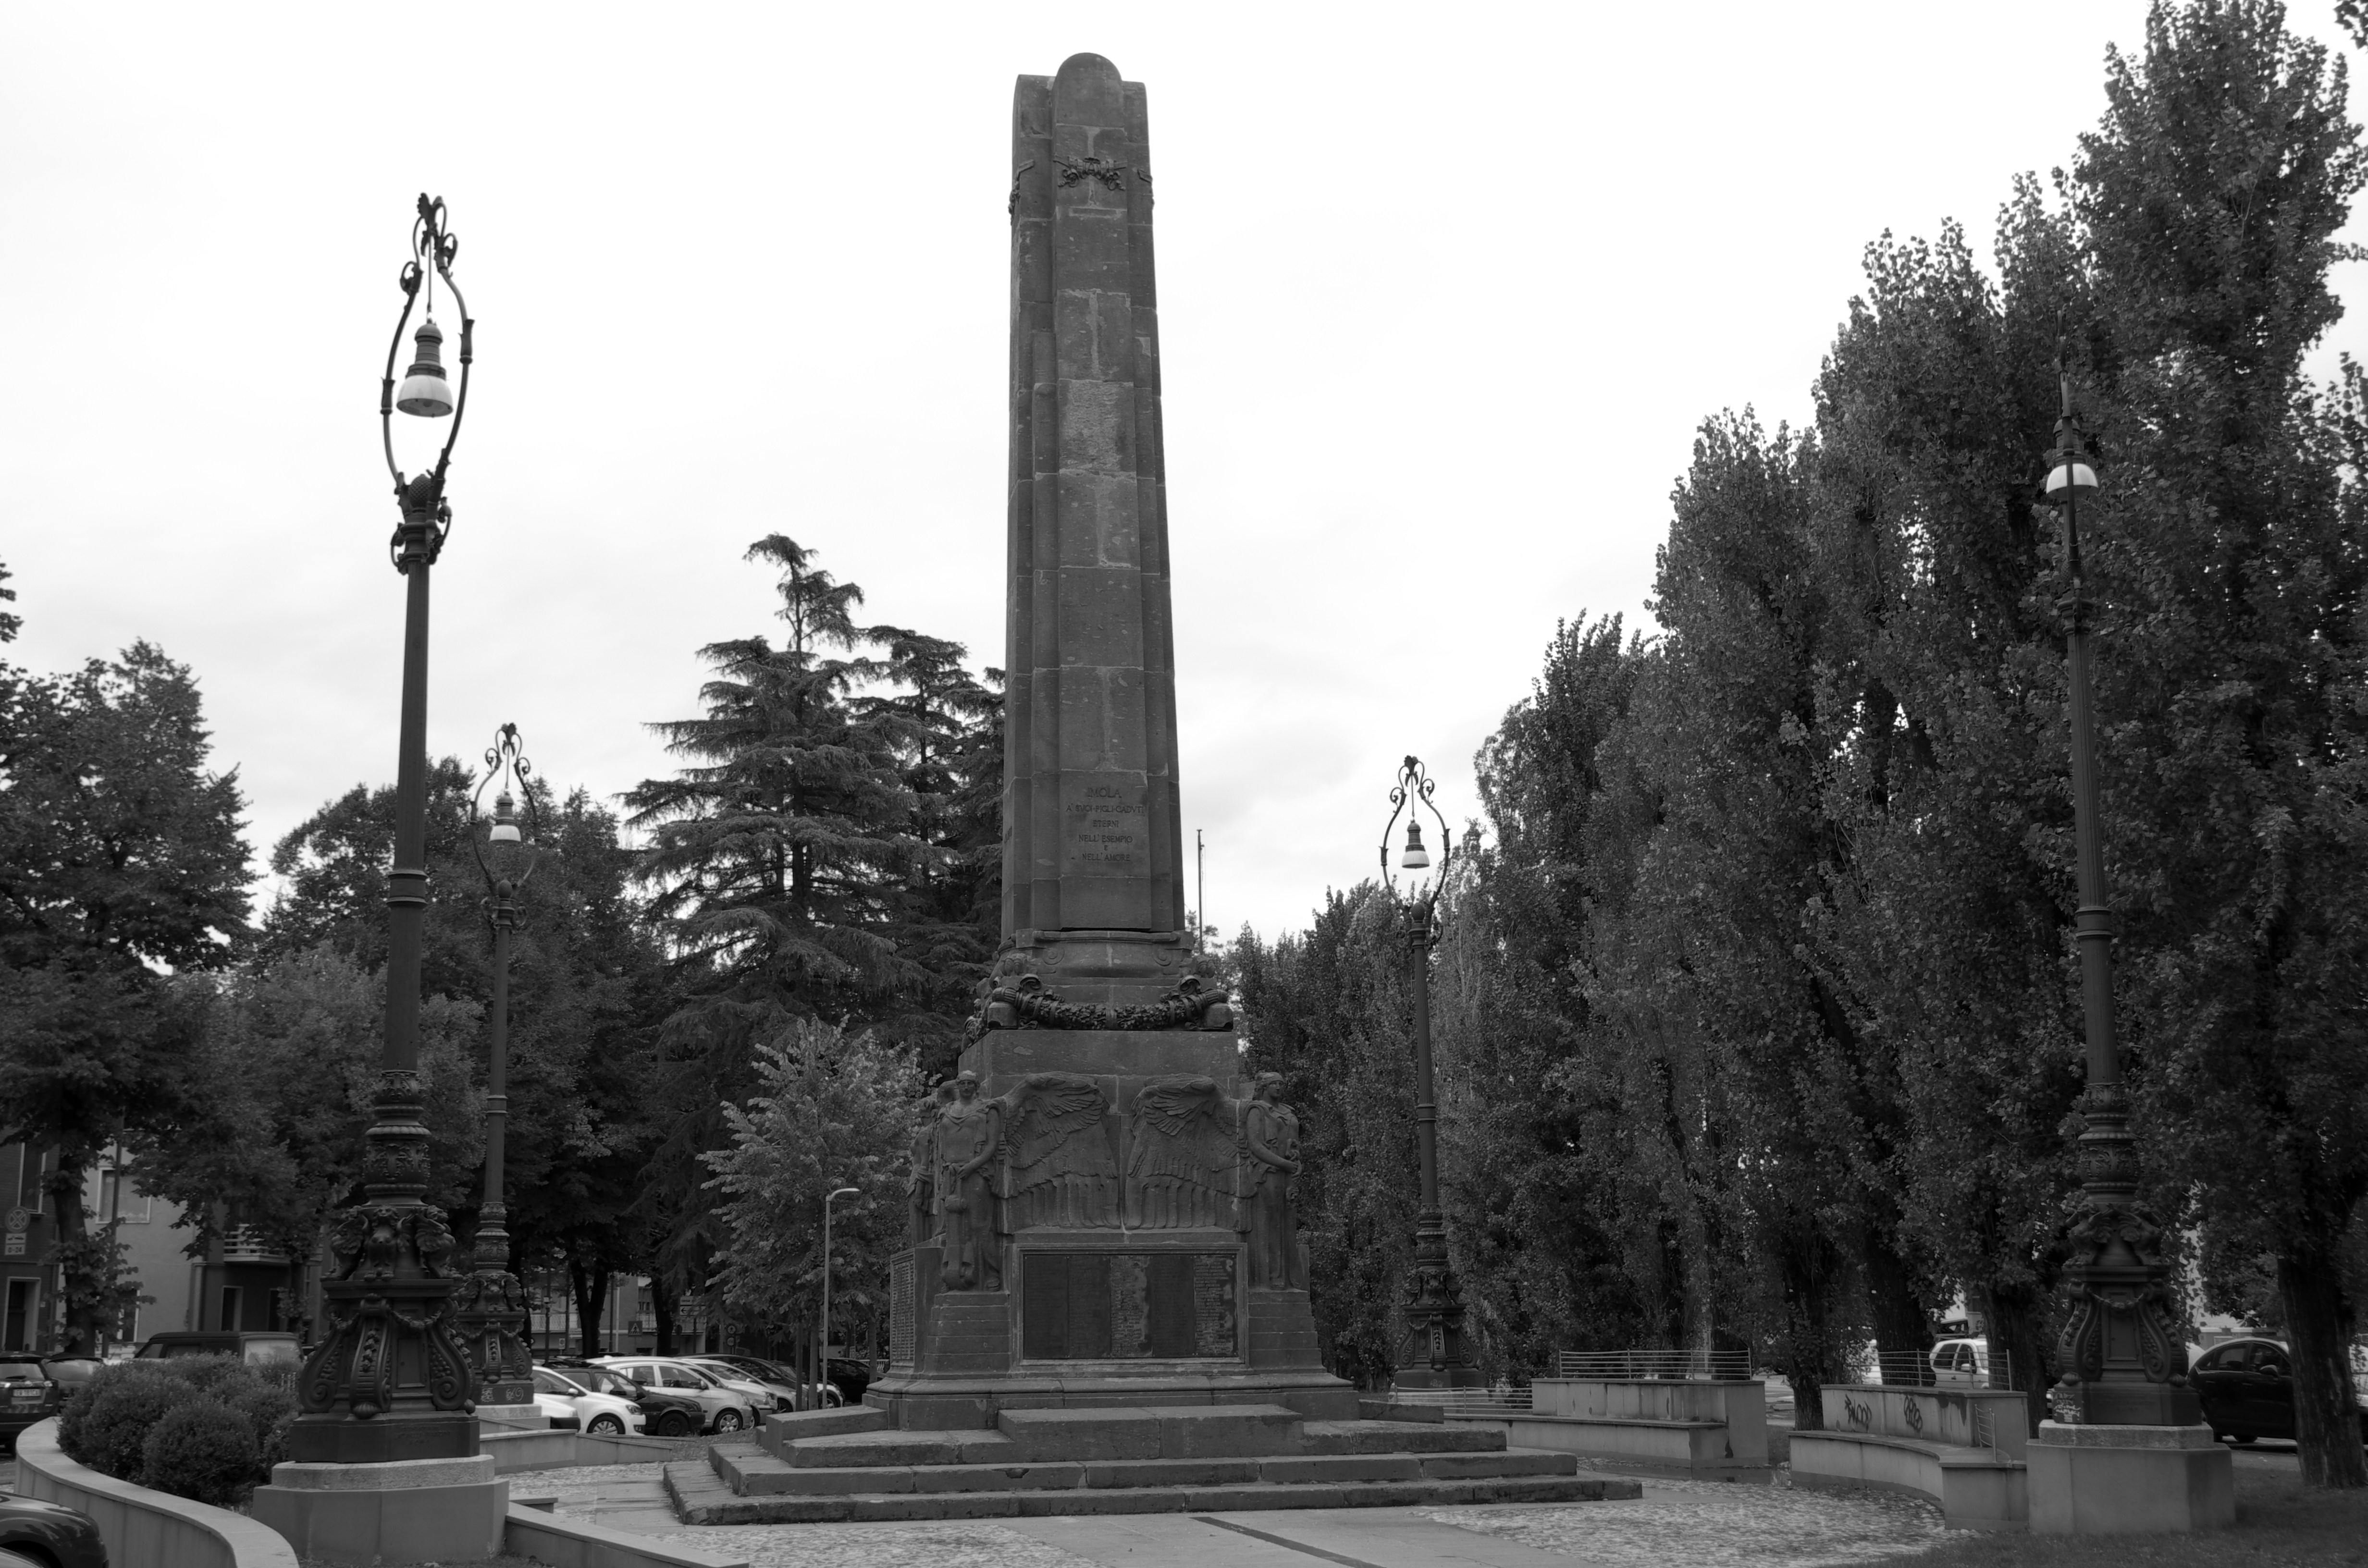 photo: https://upload.wikimedia.org/wikipedia/commons/9/92/Monumento_caduti_della_1%5E_guerra_mondiale.jpg